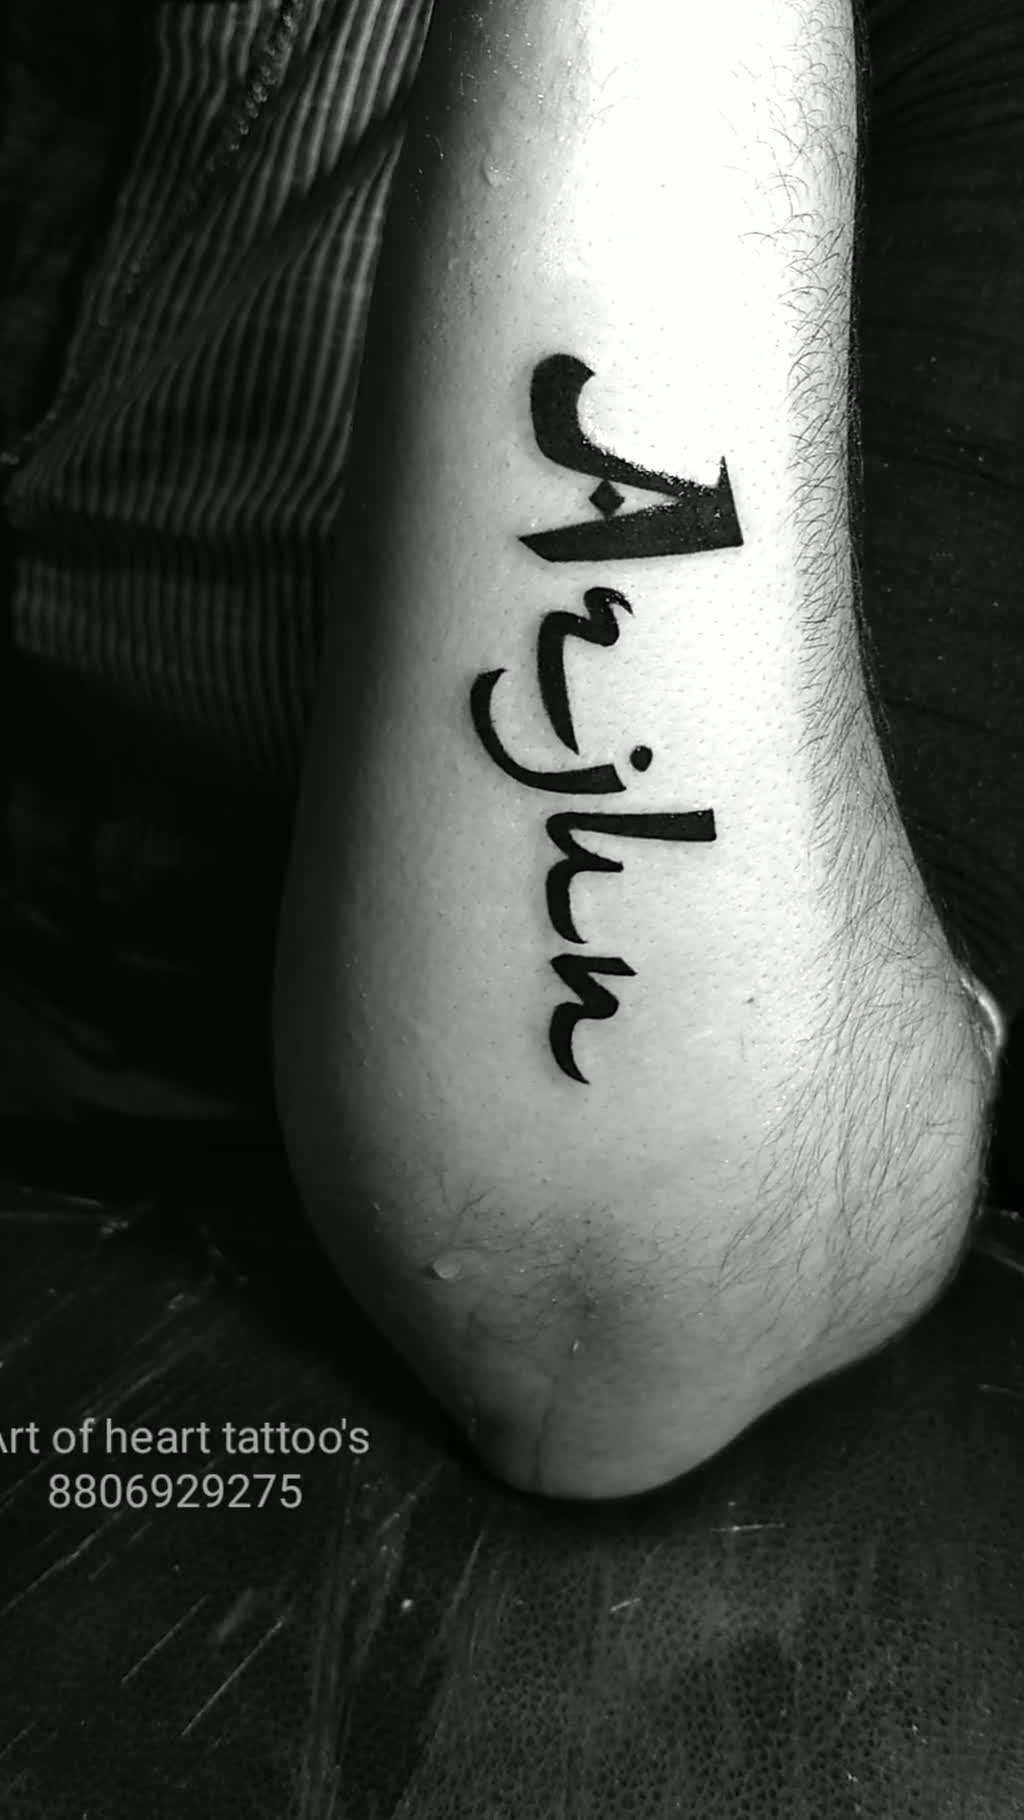 Name tattoo an arjun  King tattoo shop  Facebook